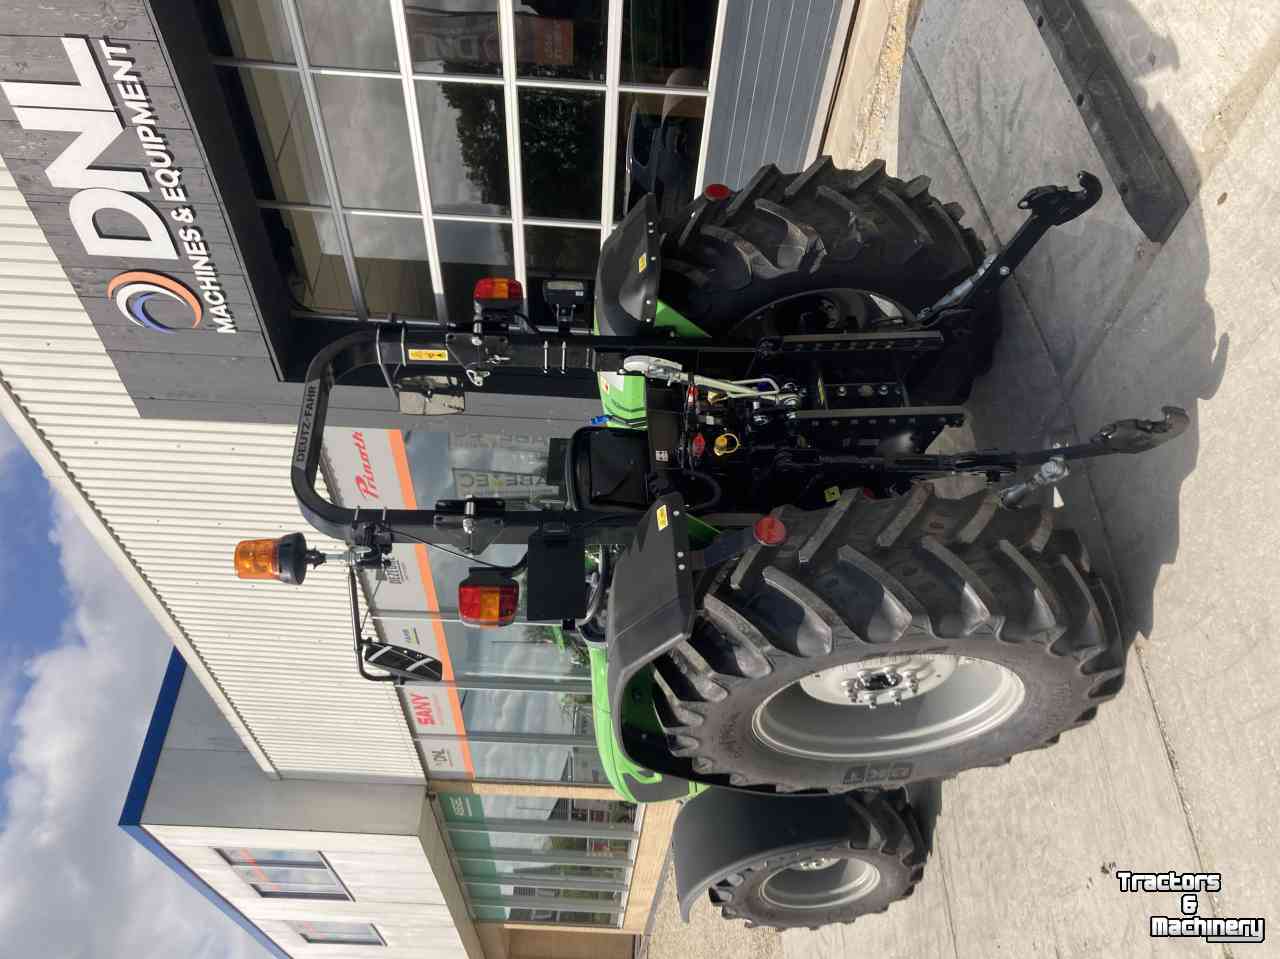 Tractors Deutz-Fahr 4070